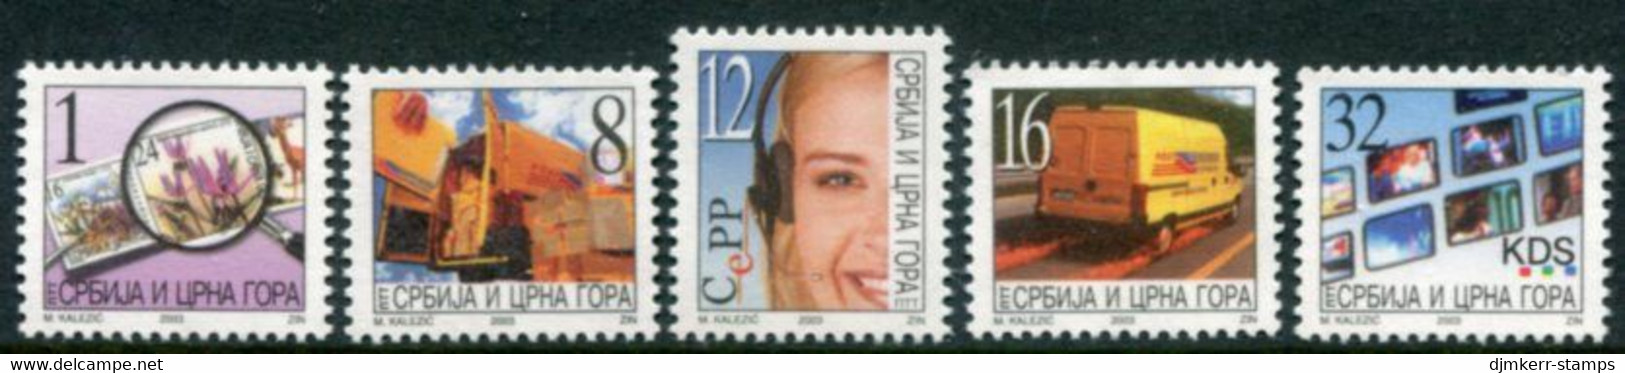 YUGOSLAVIA (Serbia & Montenegro) 2003 Definitive: Postal Services MNH / **  Michel 3133-37 - Nuevos